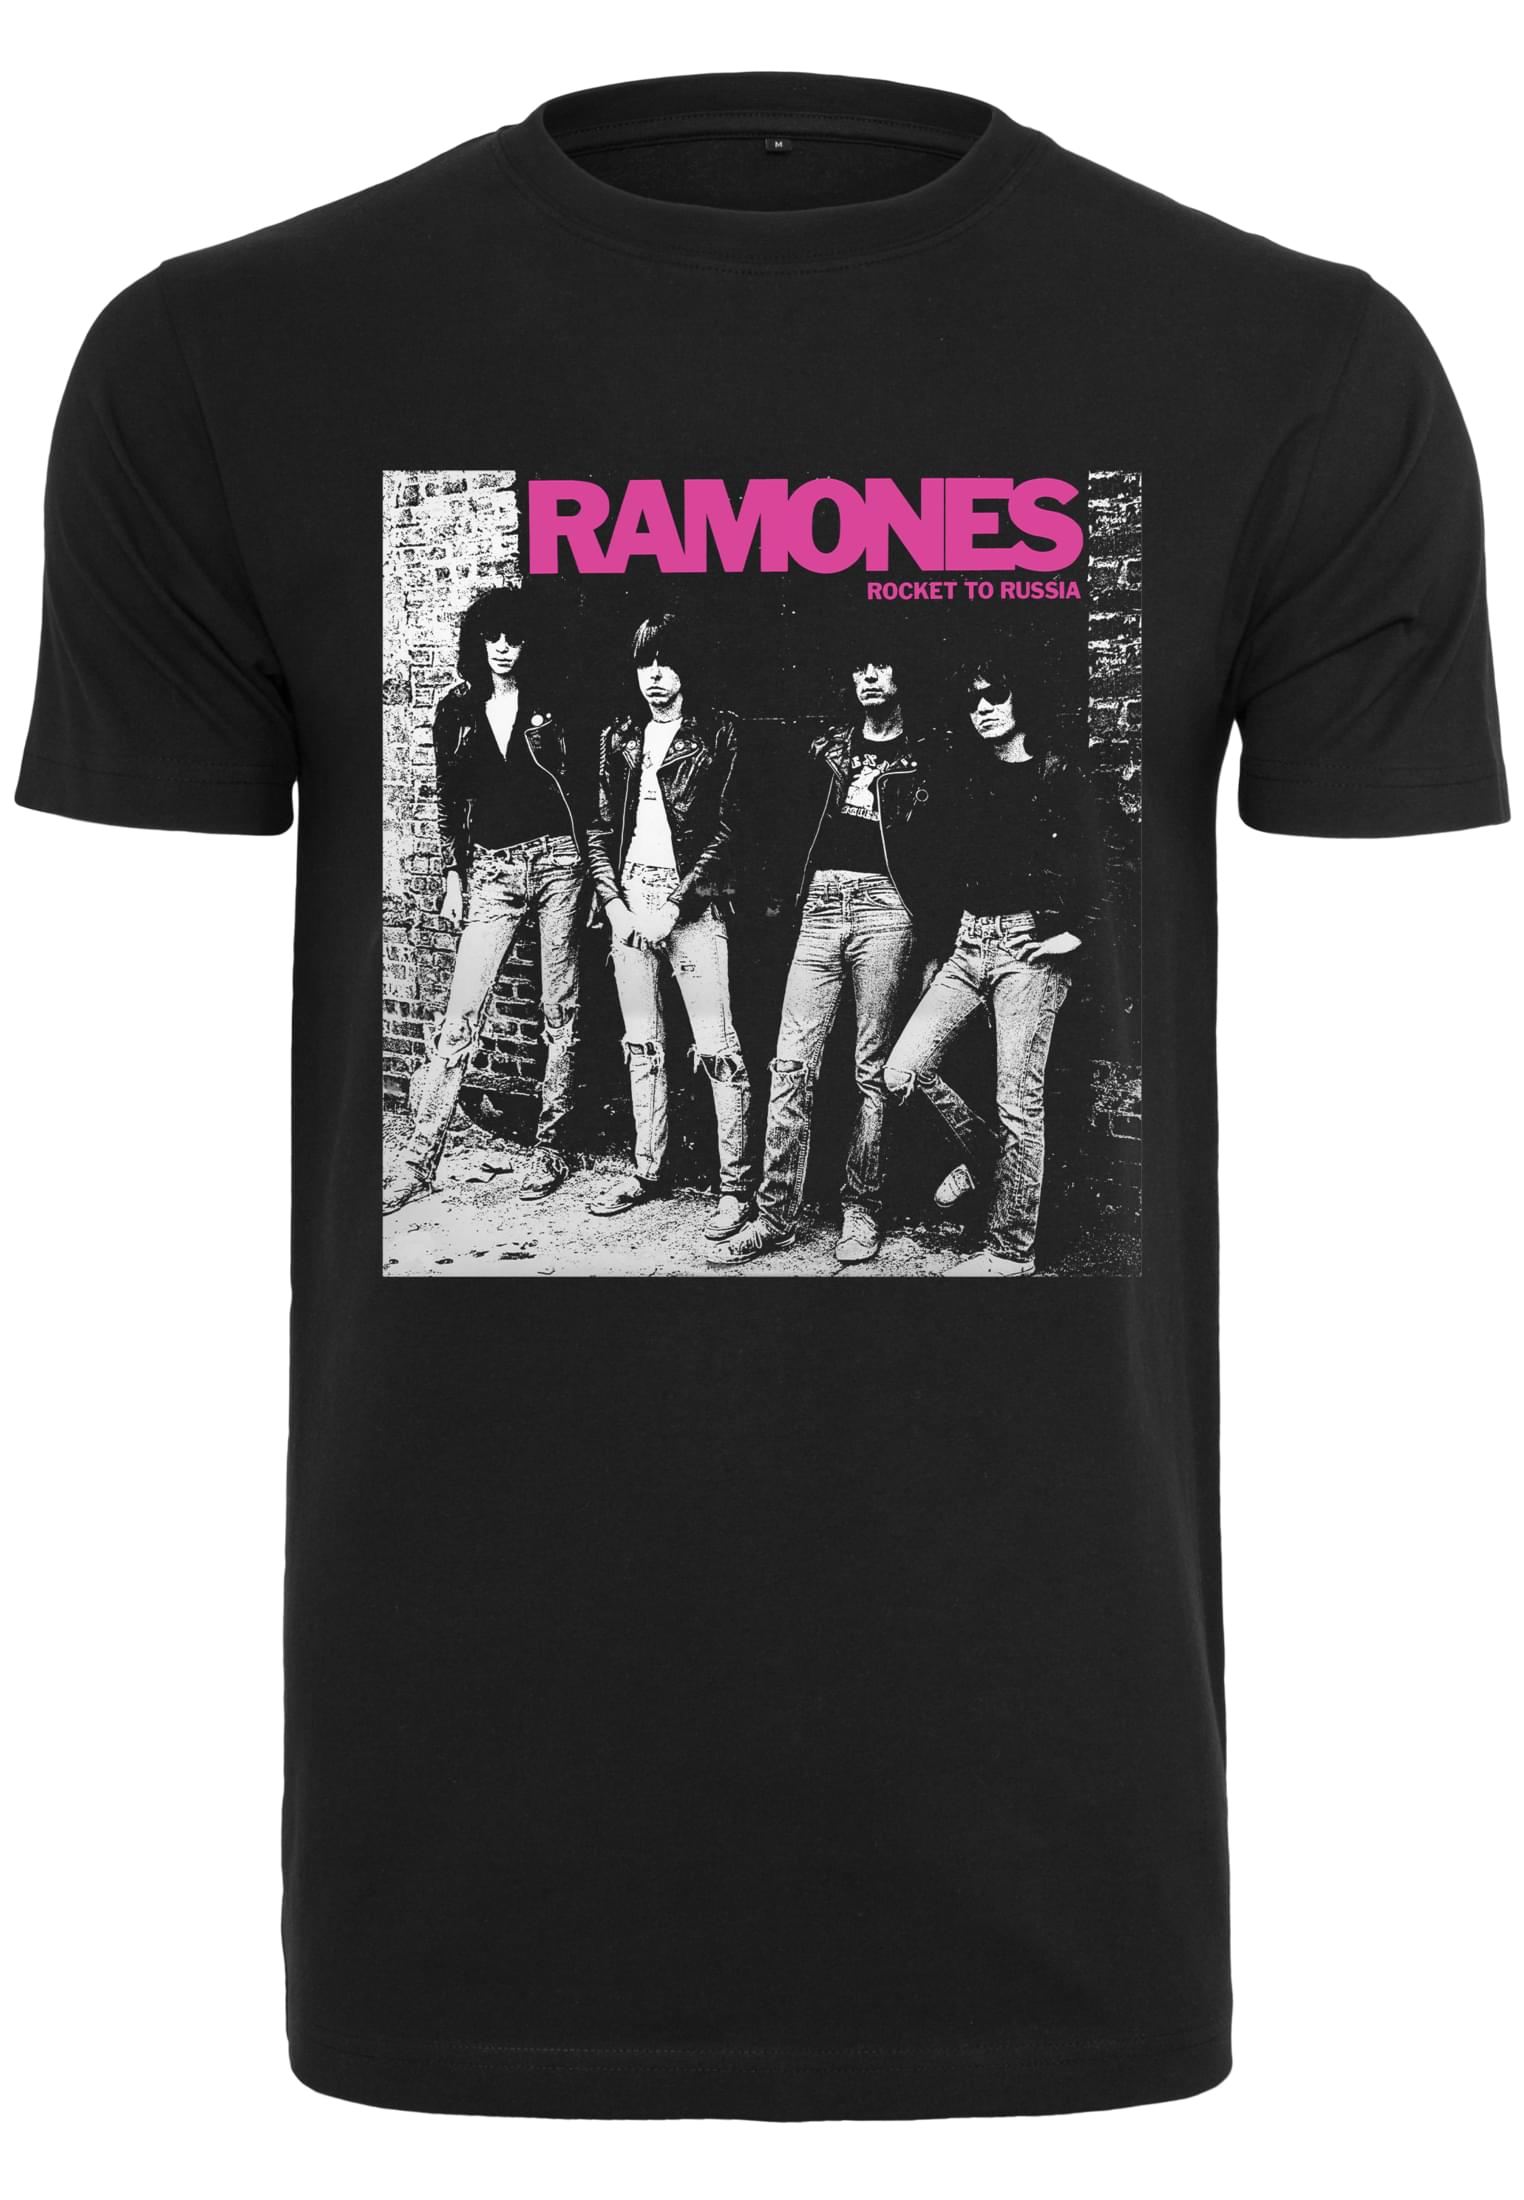 Coming Soon Ramones Wall Tee in Farbe black